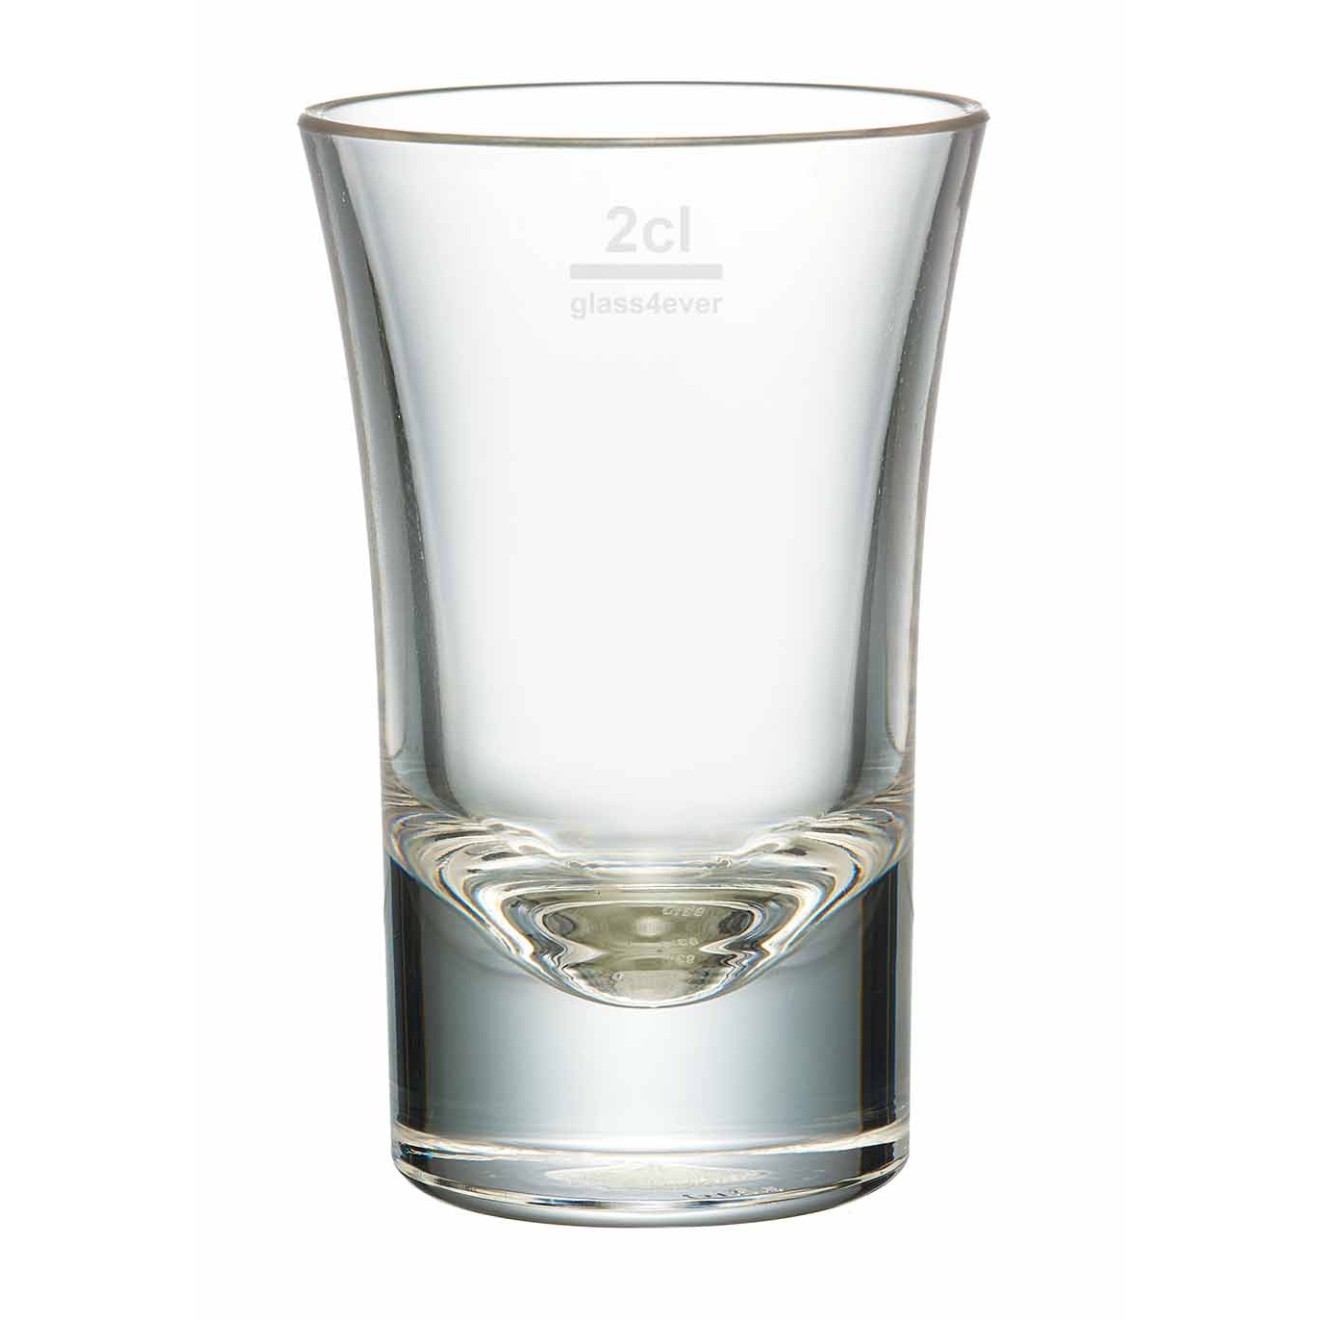 Schnapsglas Shotglas Gläser Pinnchen Schnapsgläser Trinkglas Glas 2cl KG-61001 